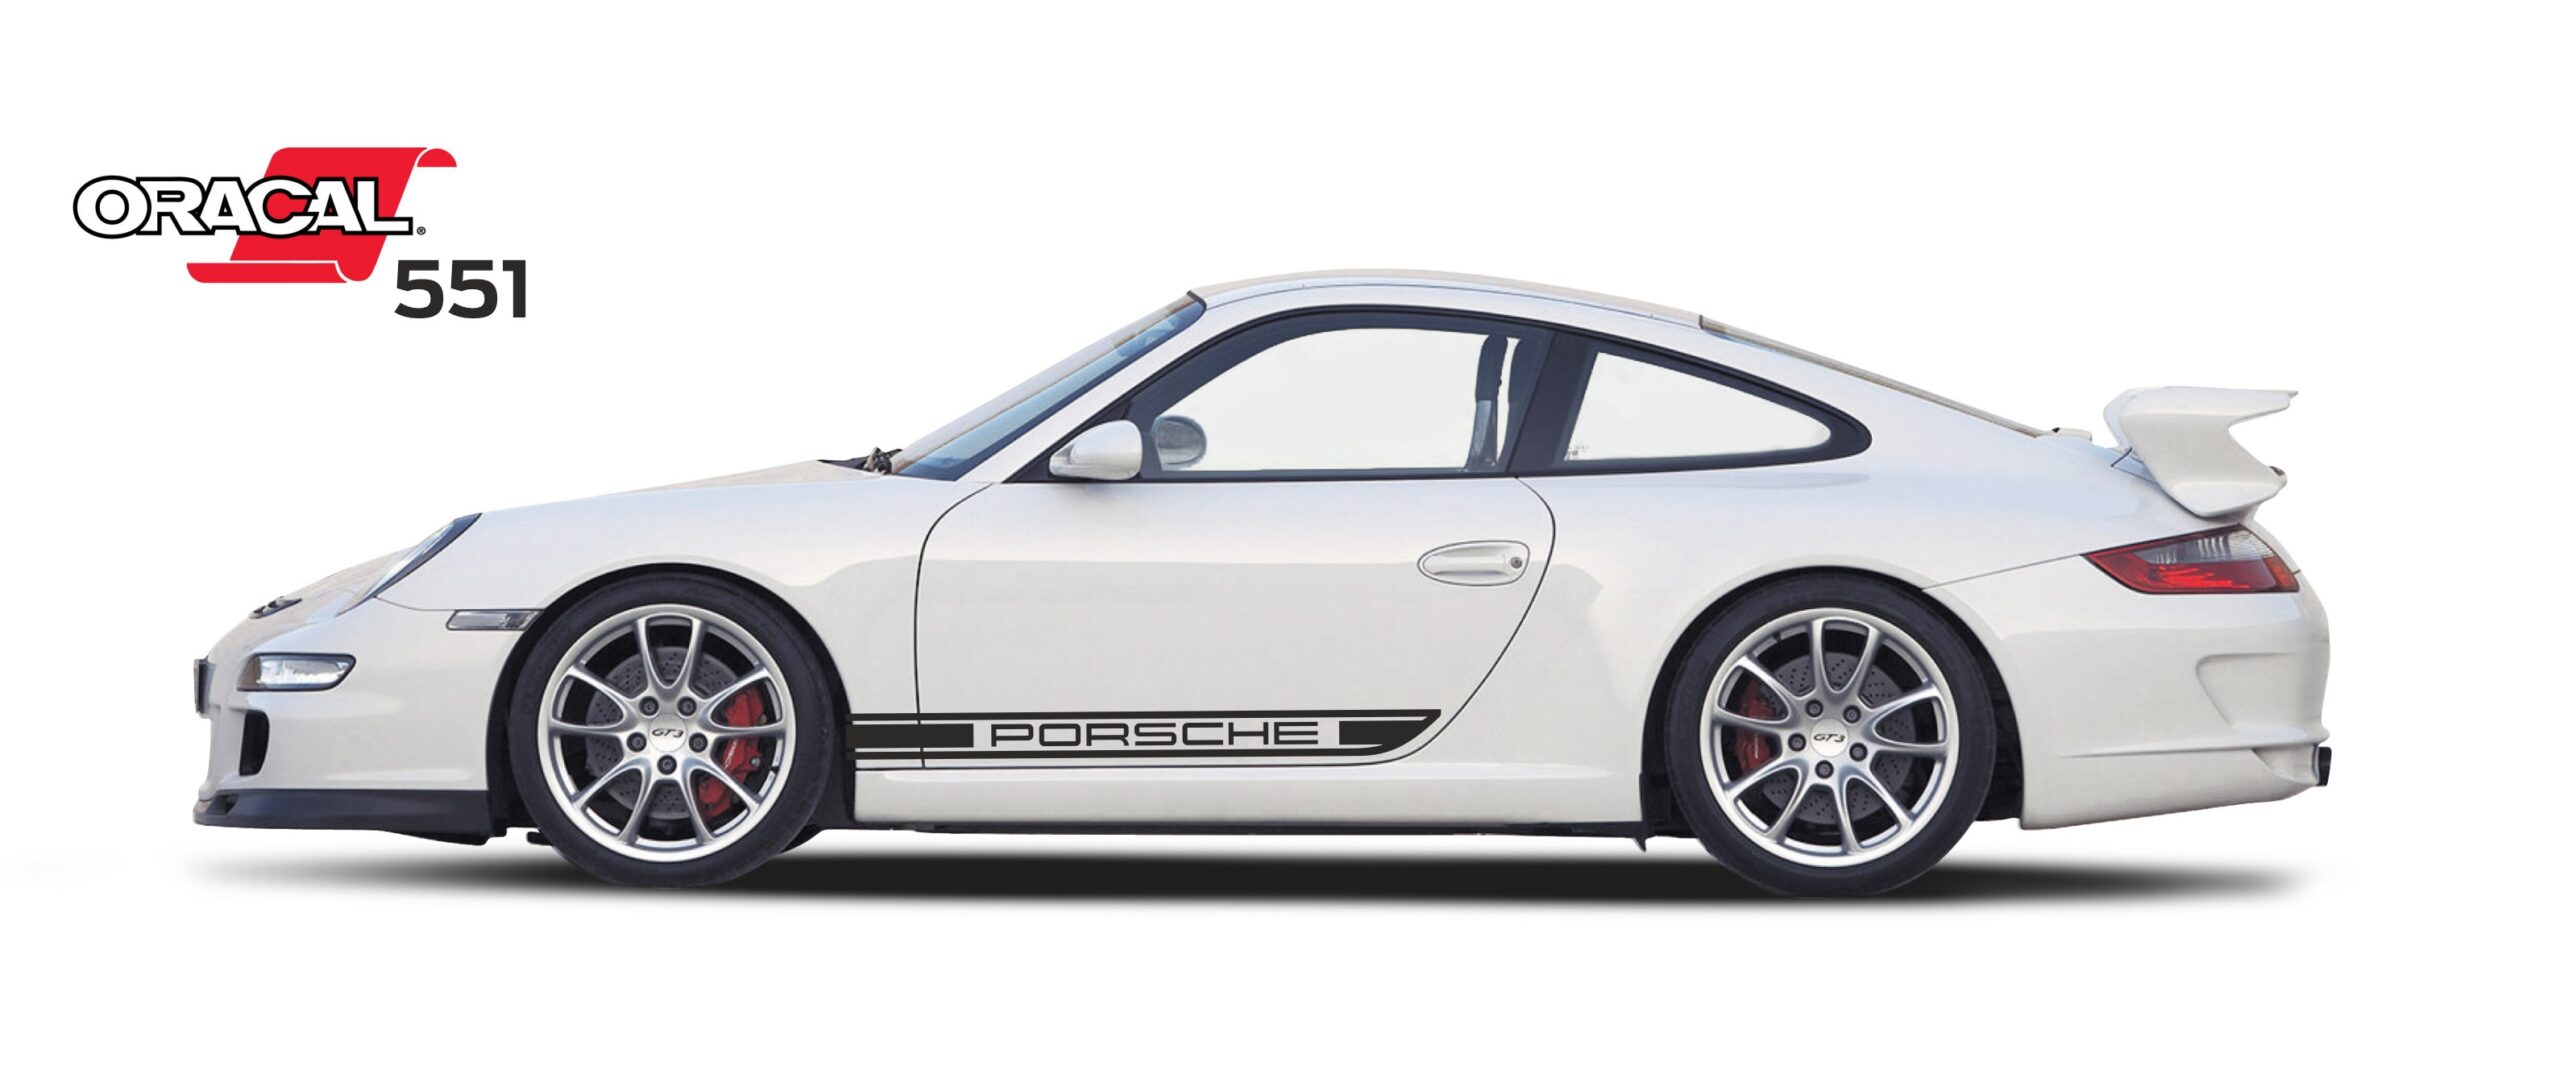 Porsche 911 naklejki decals stripes sticker aufkleber nalepky samolepky tuning